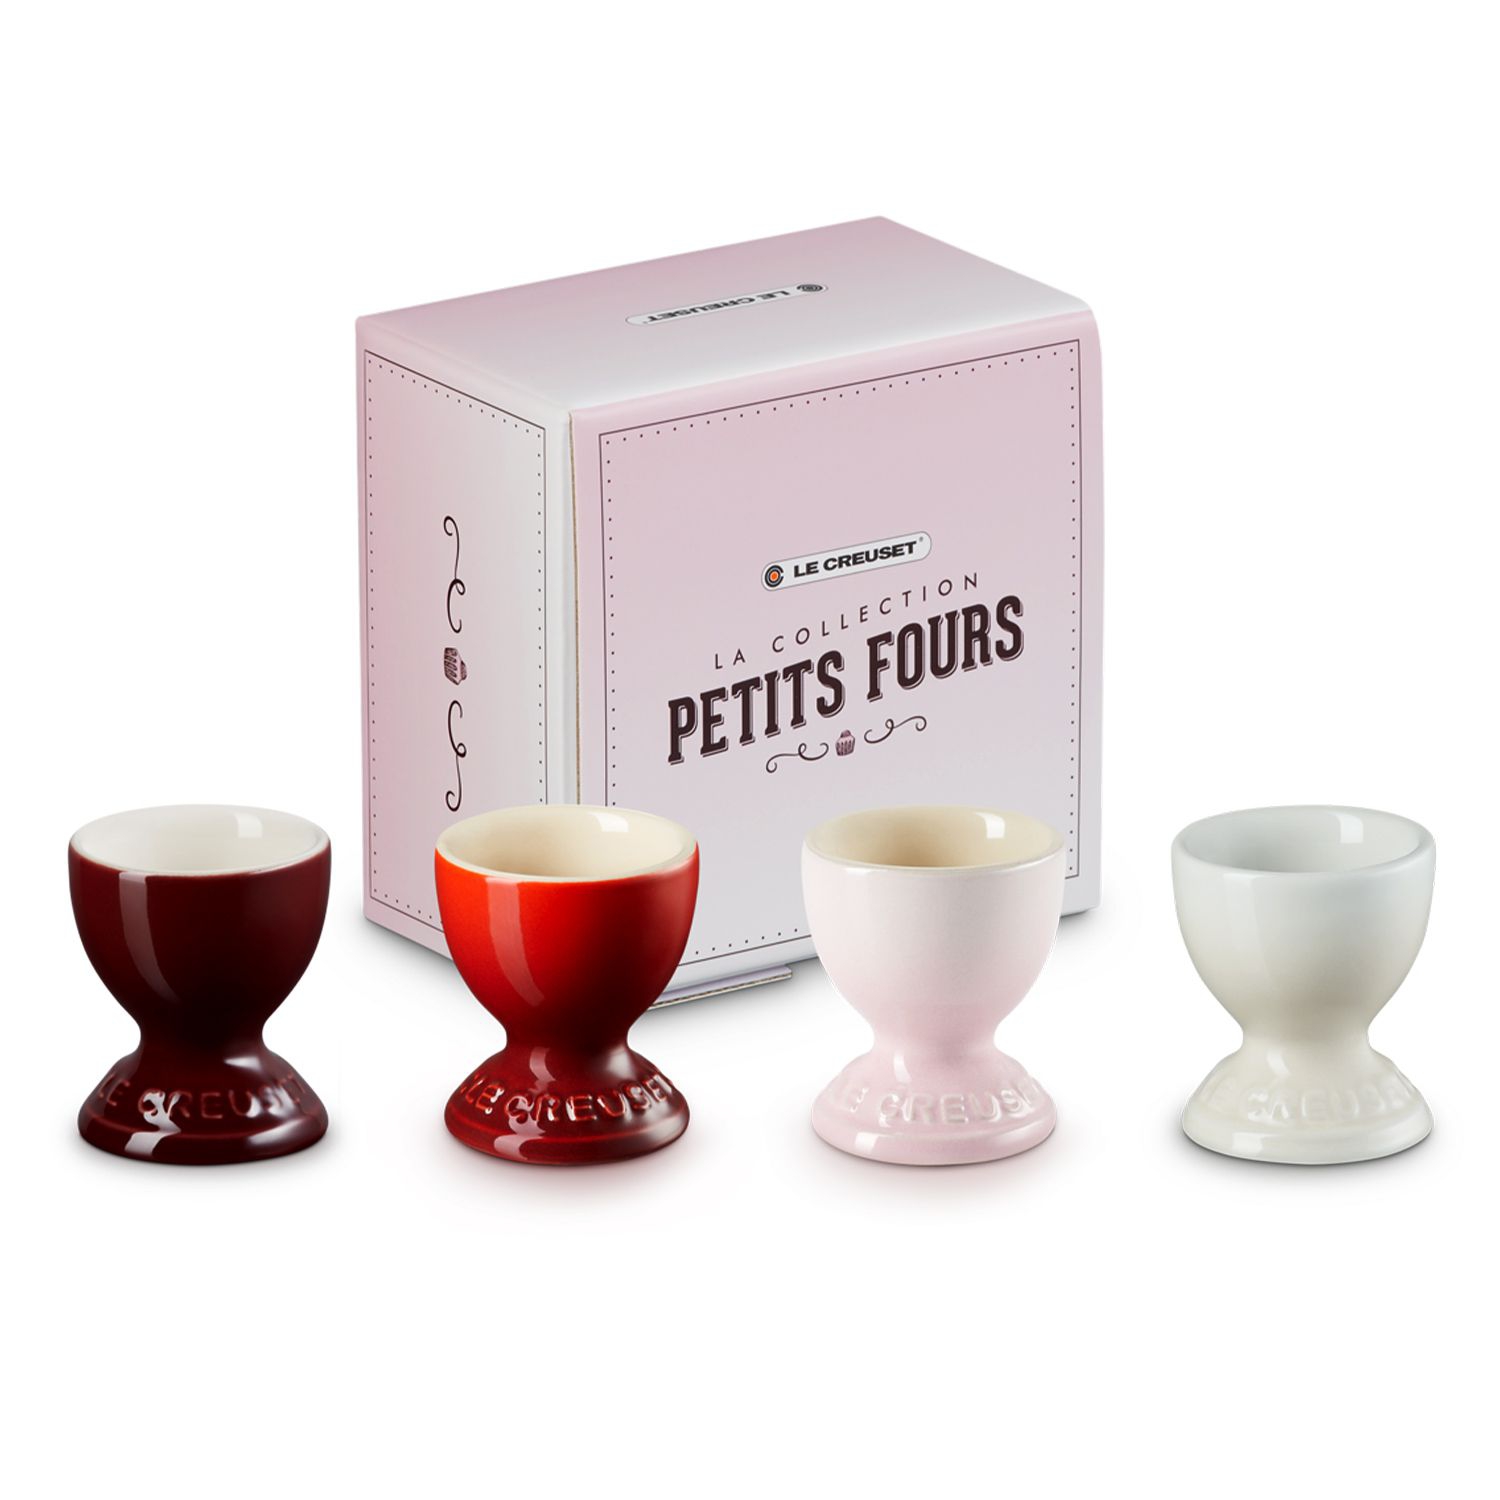 Le Creuset - Set of 4 egg cups - Petits Fours